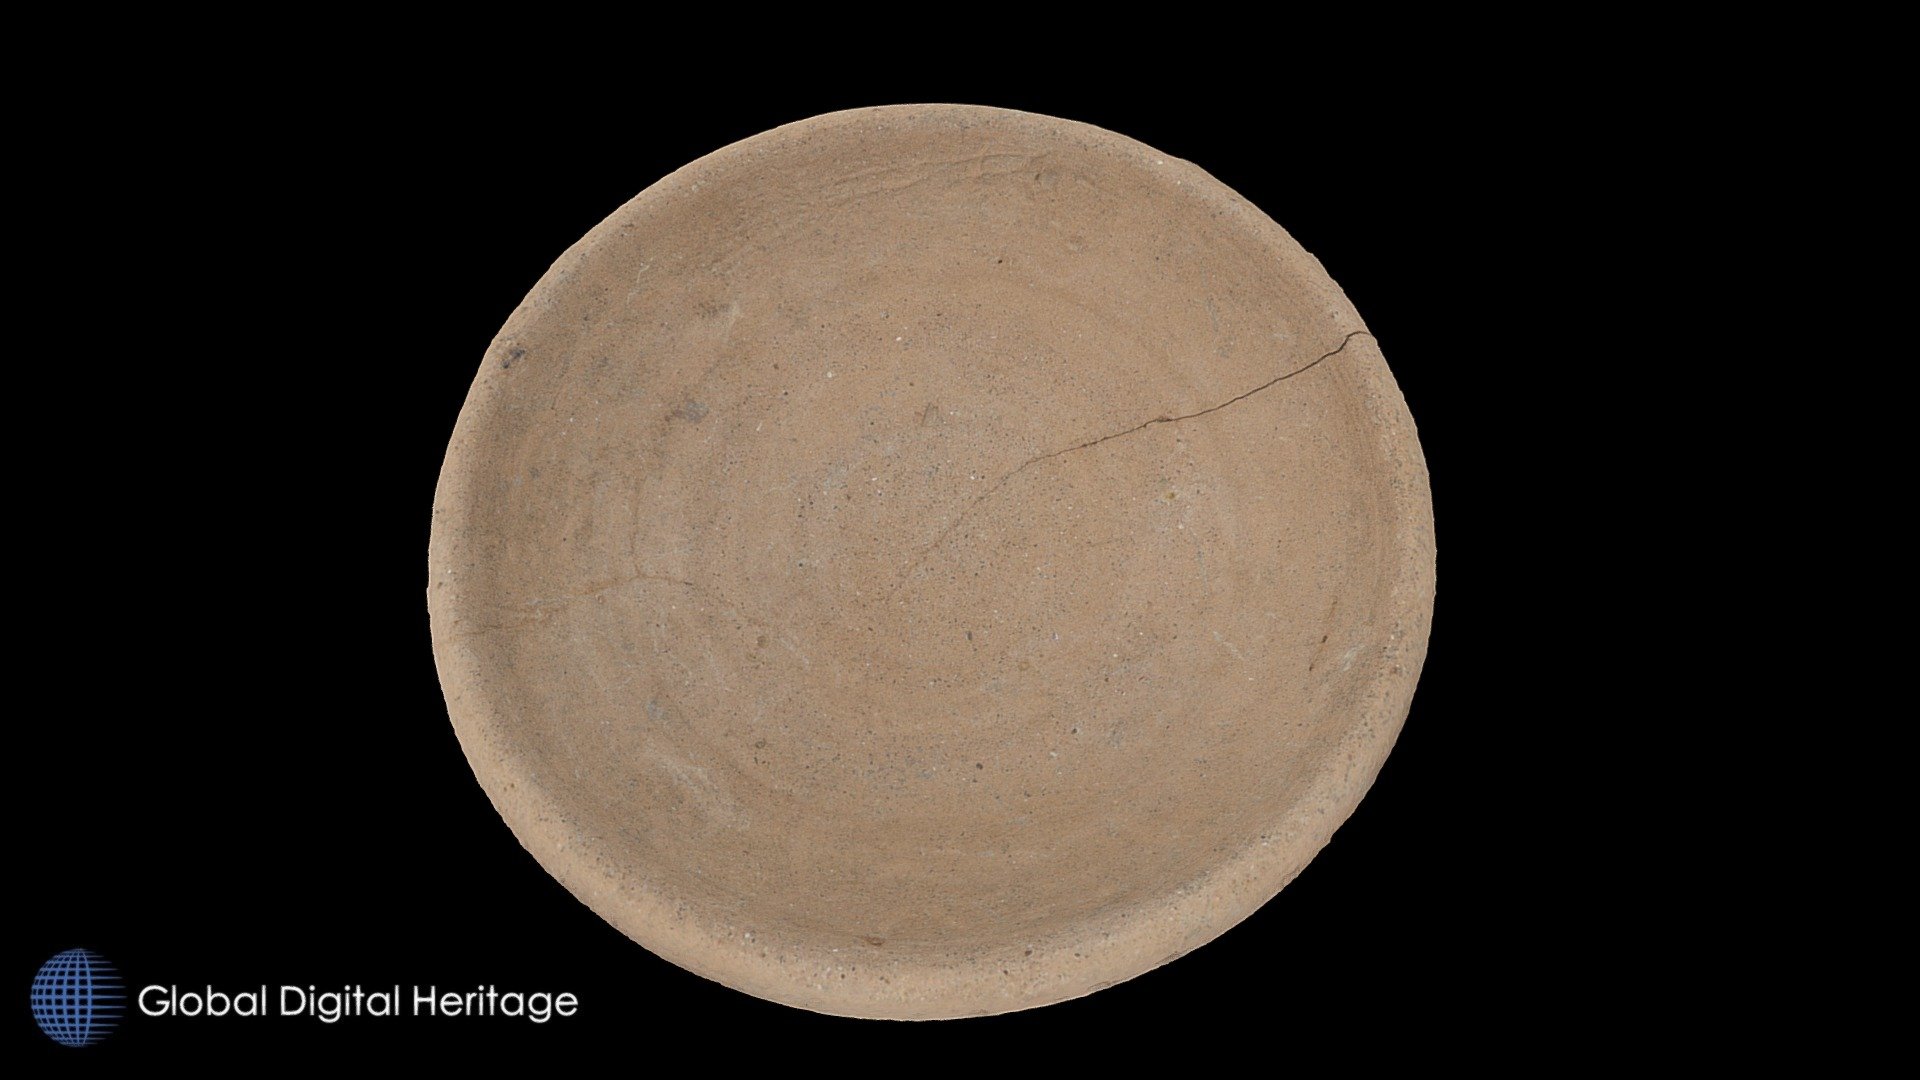 Roman Plate, Cucufate, Portugal